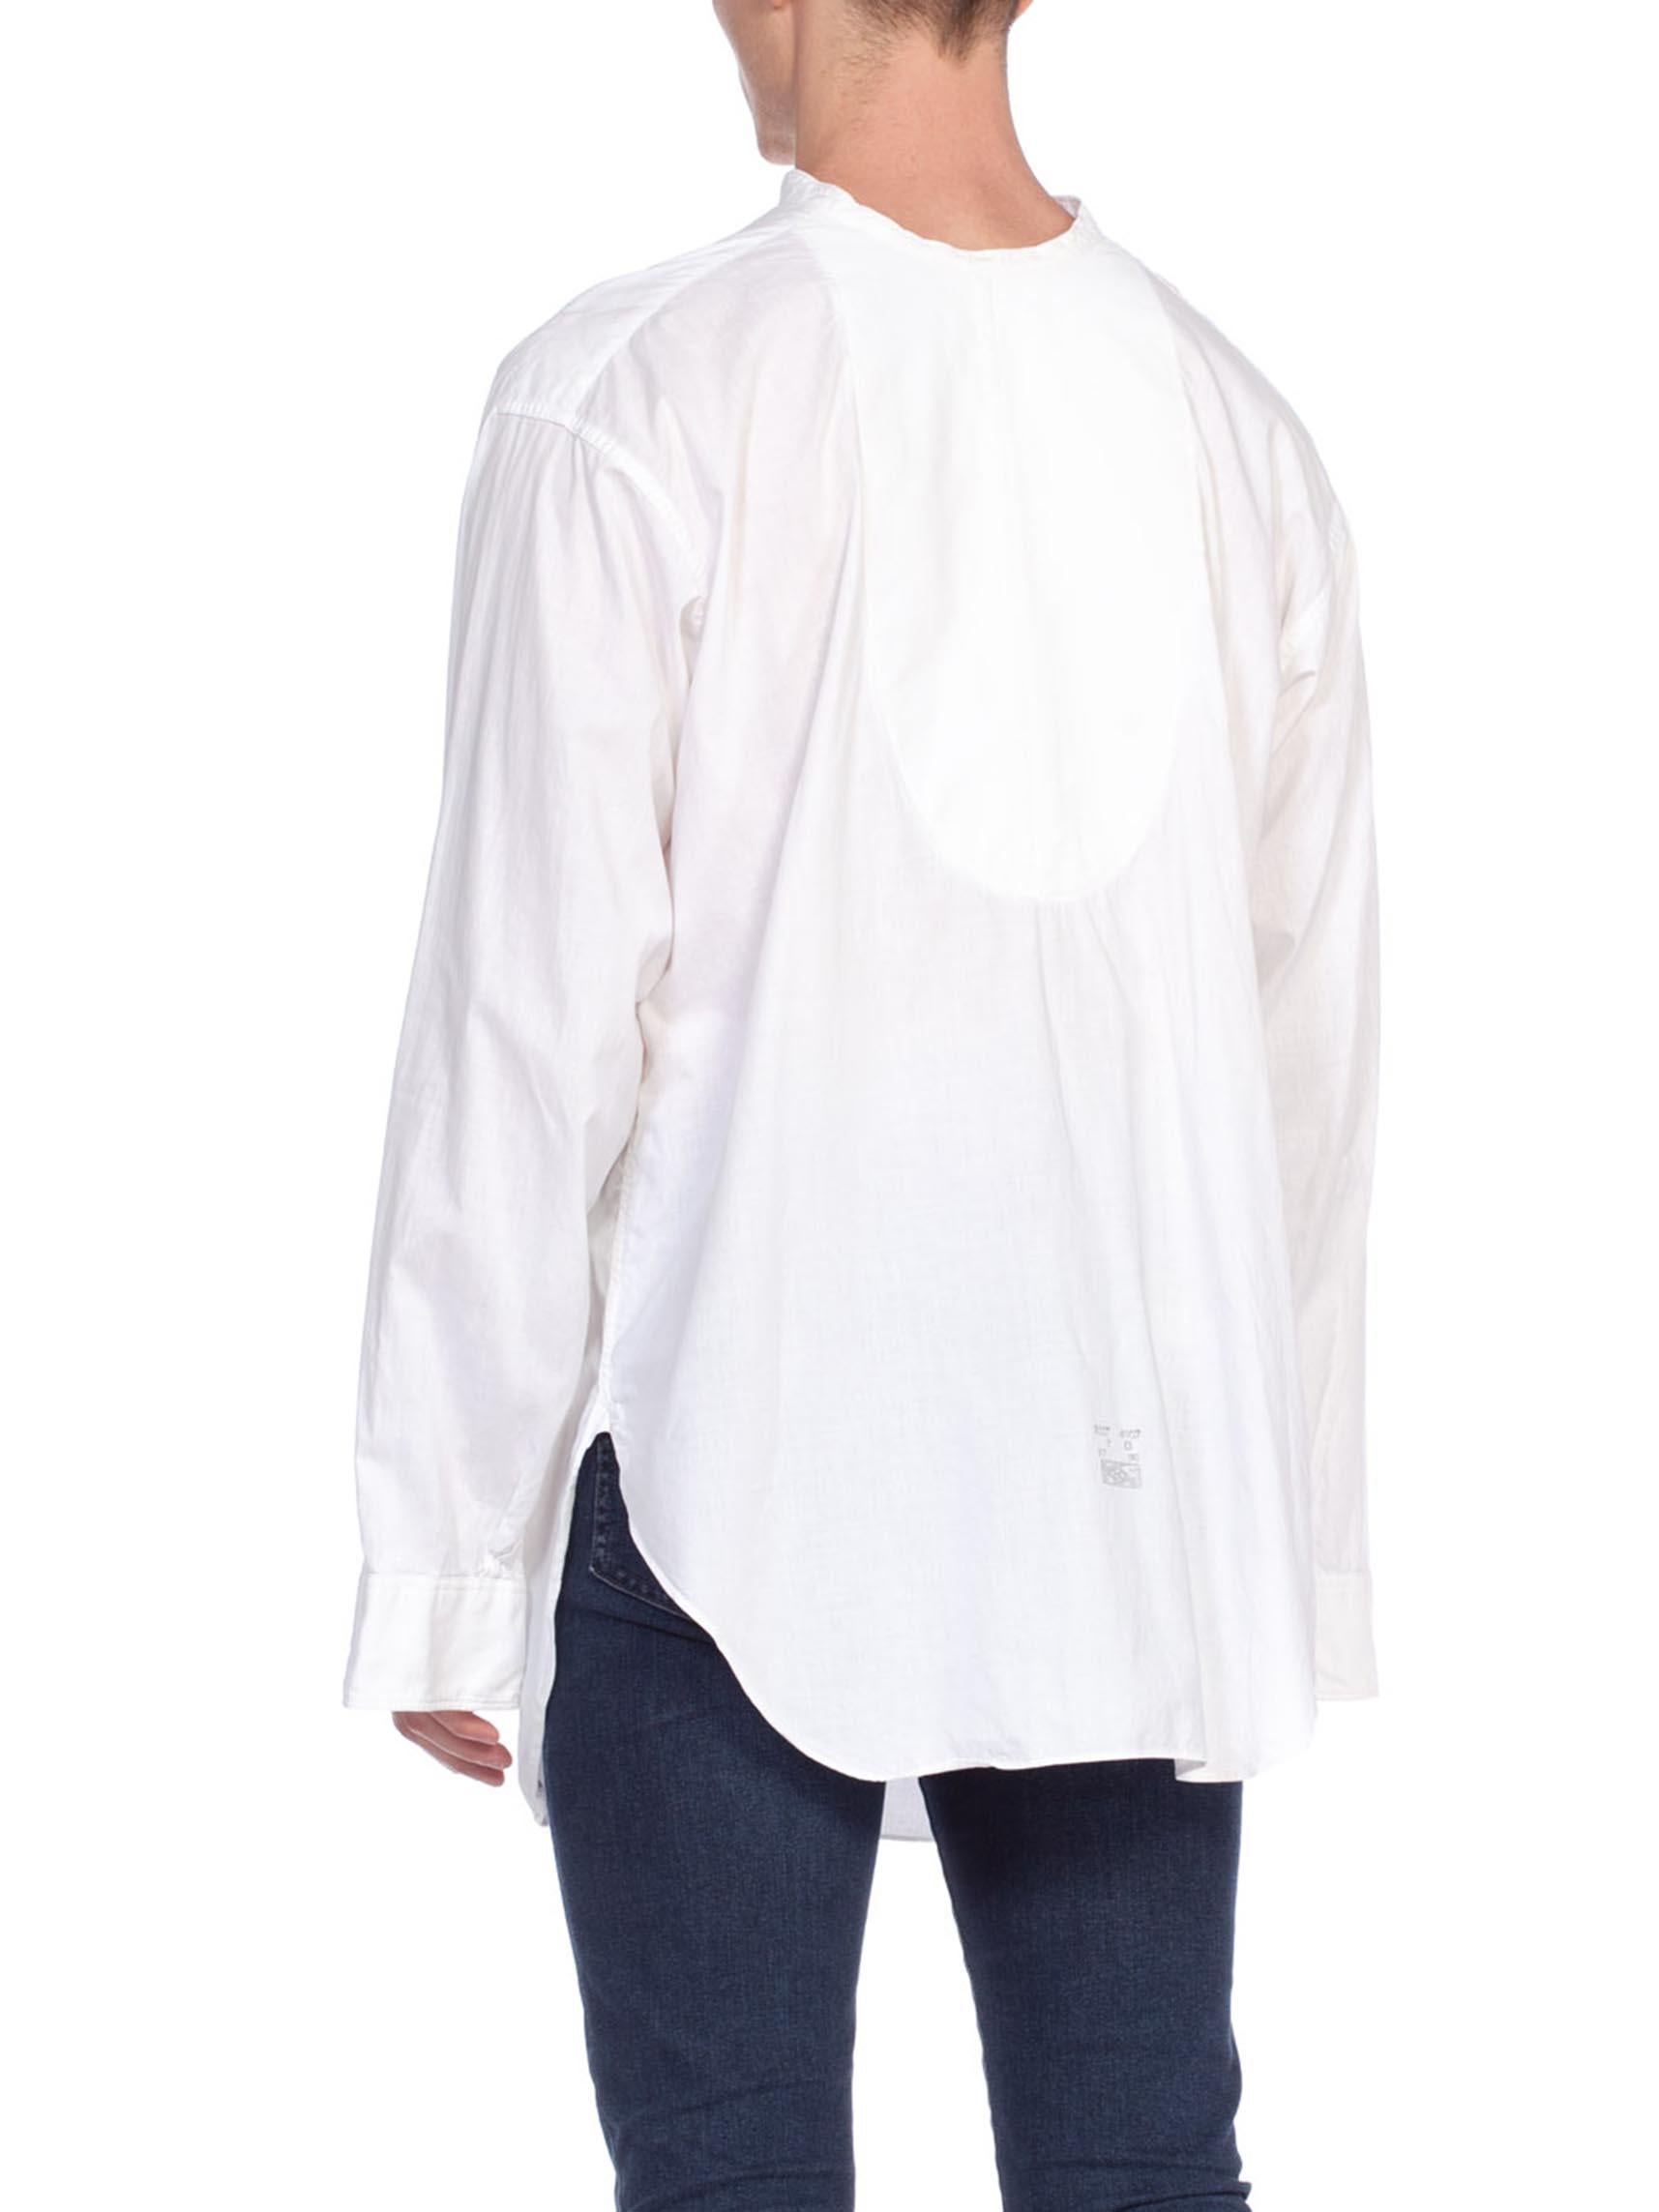 1930S White Organic Cotton Rare Men's Antique Formal Shirt (Size 17